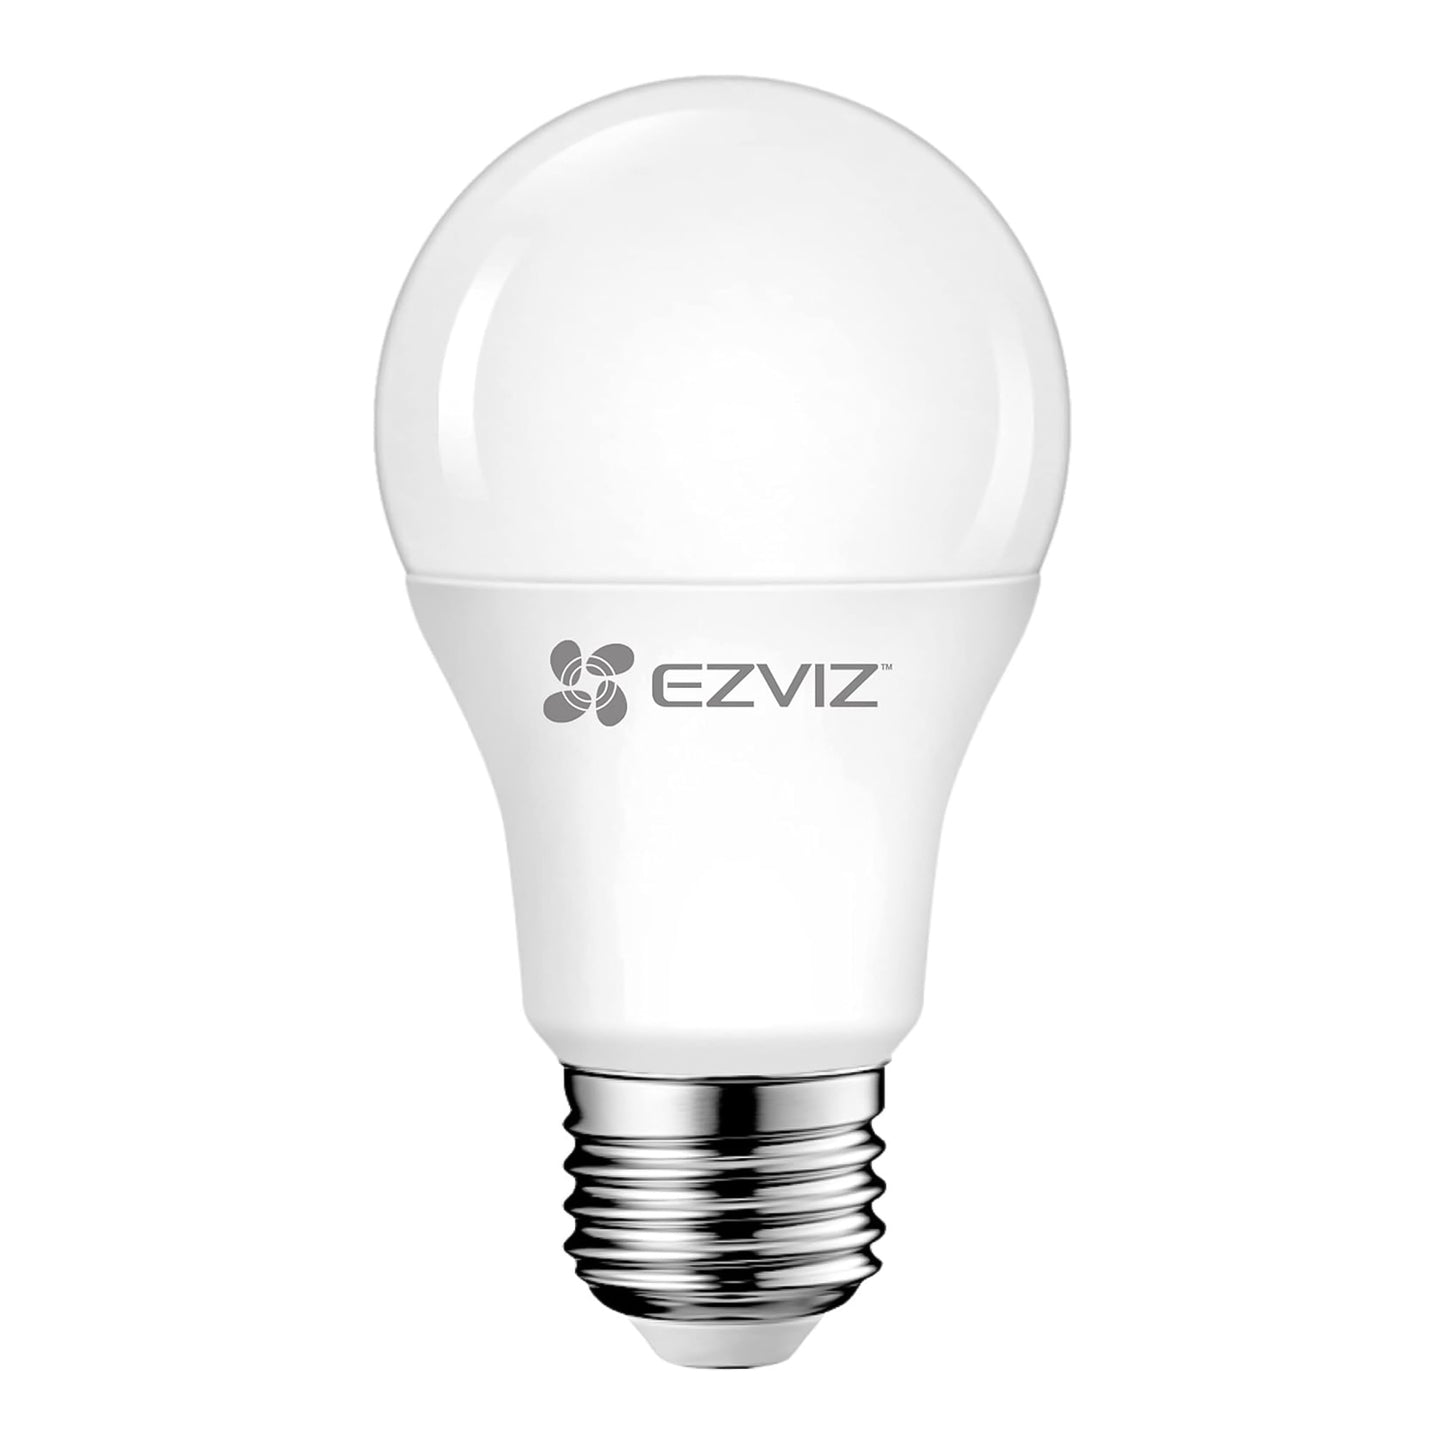 Ezviz LB1 Smart Wi-Fi LED bulb, 8W 806 Lumen, voice controls, compatible with Alexa, E27 socket, 2700K warm light, dimmable